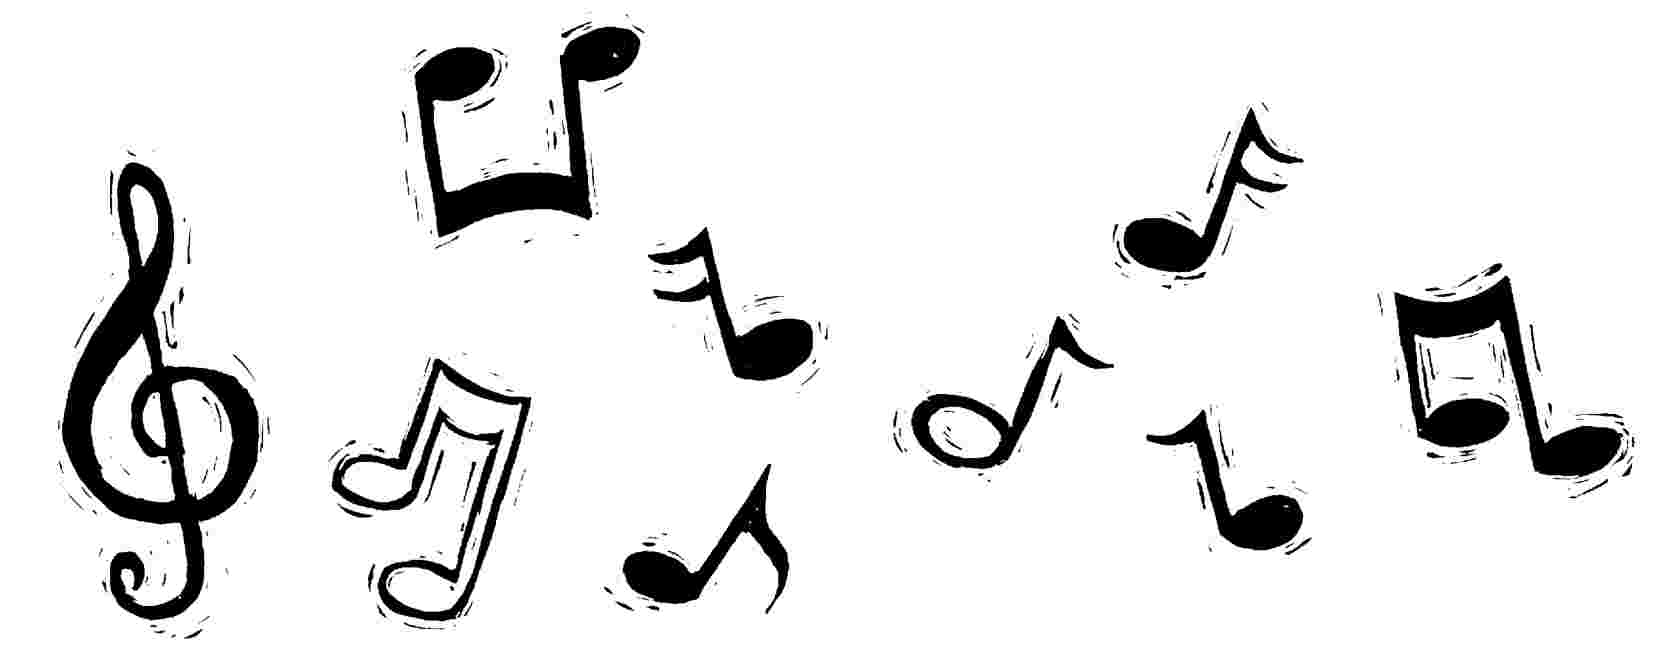 Free Music Symbols Picture, Download Free Clip Art, Free Clip Art